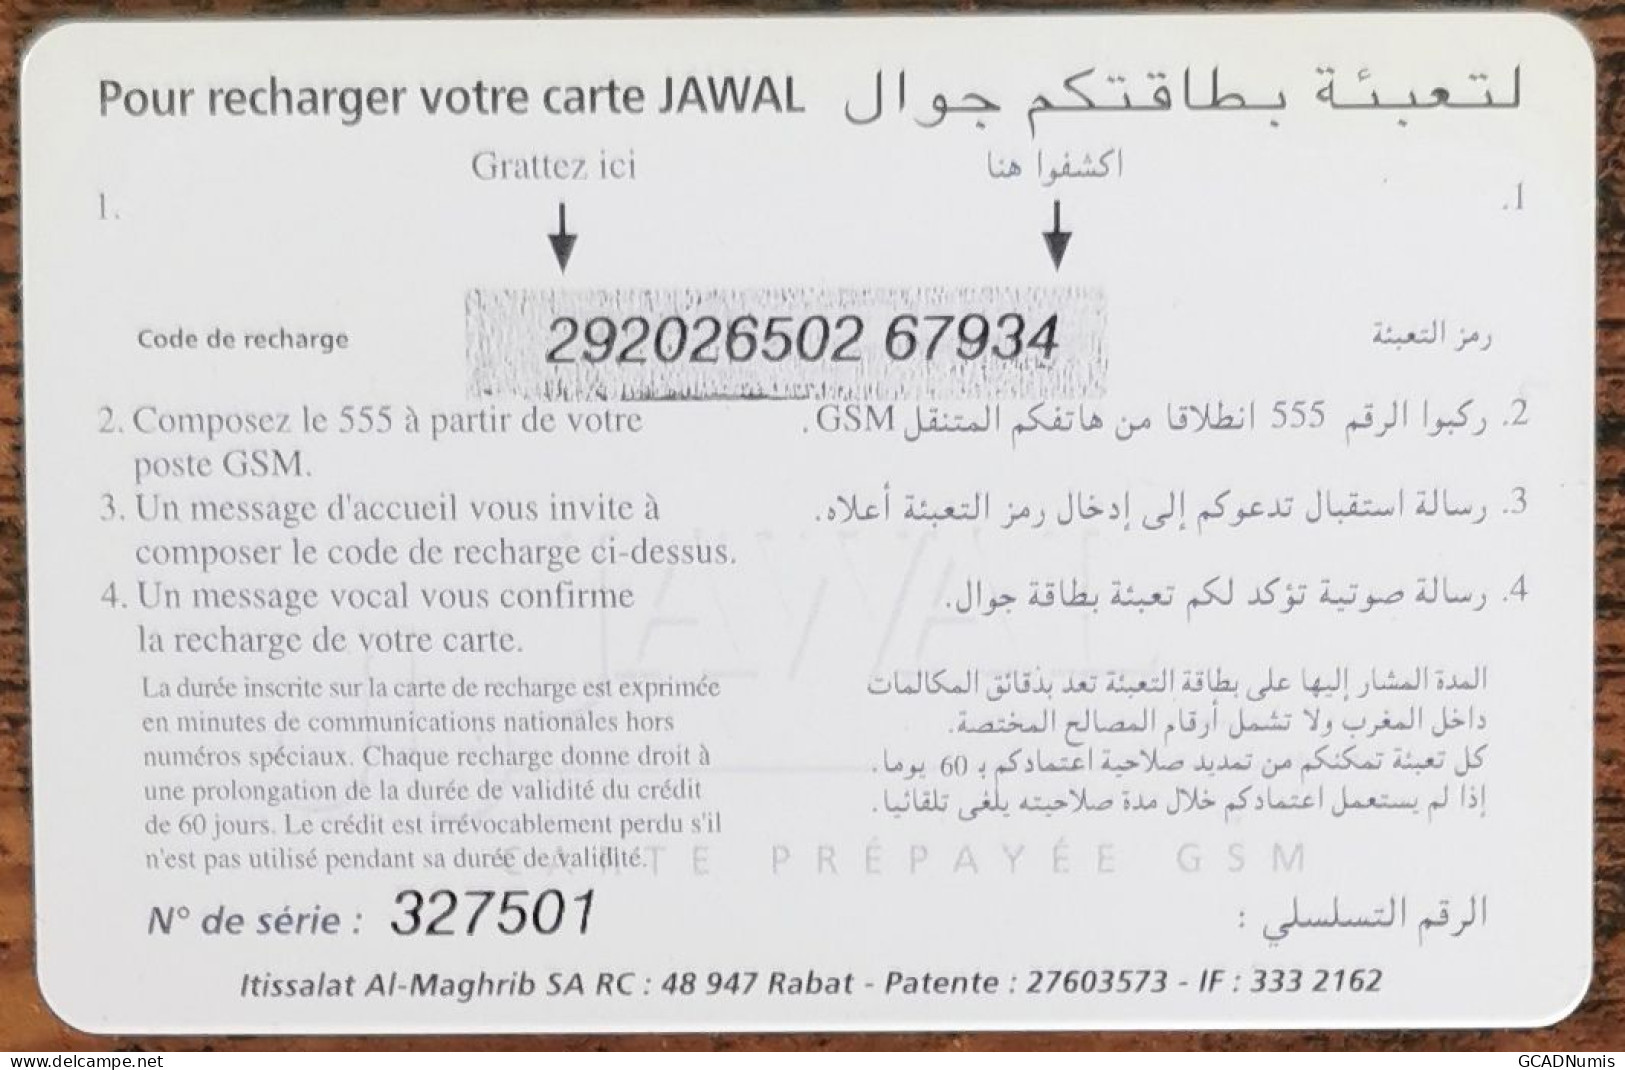 Carte De Recharge - Jawal 30mn Mobile Refill Maroc Telecom - Télécarte ~45 - Morocco